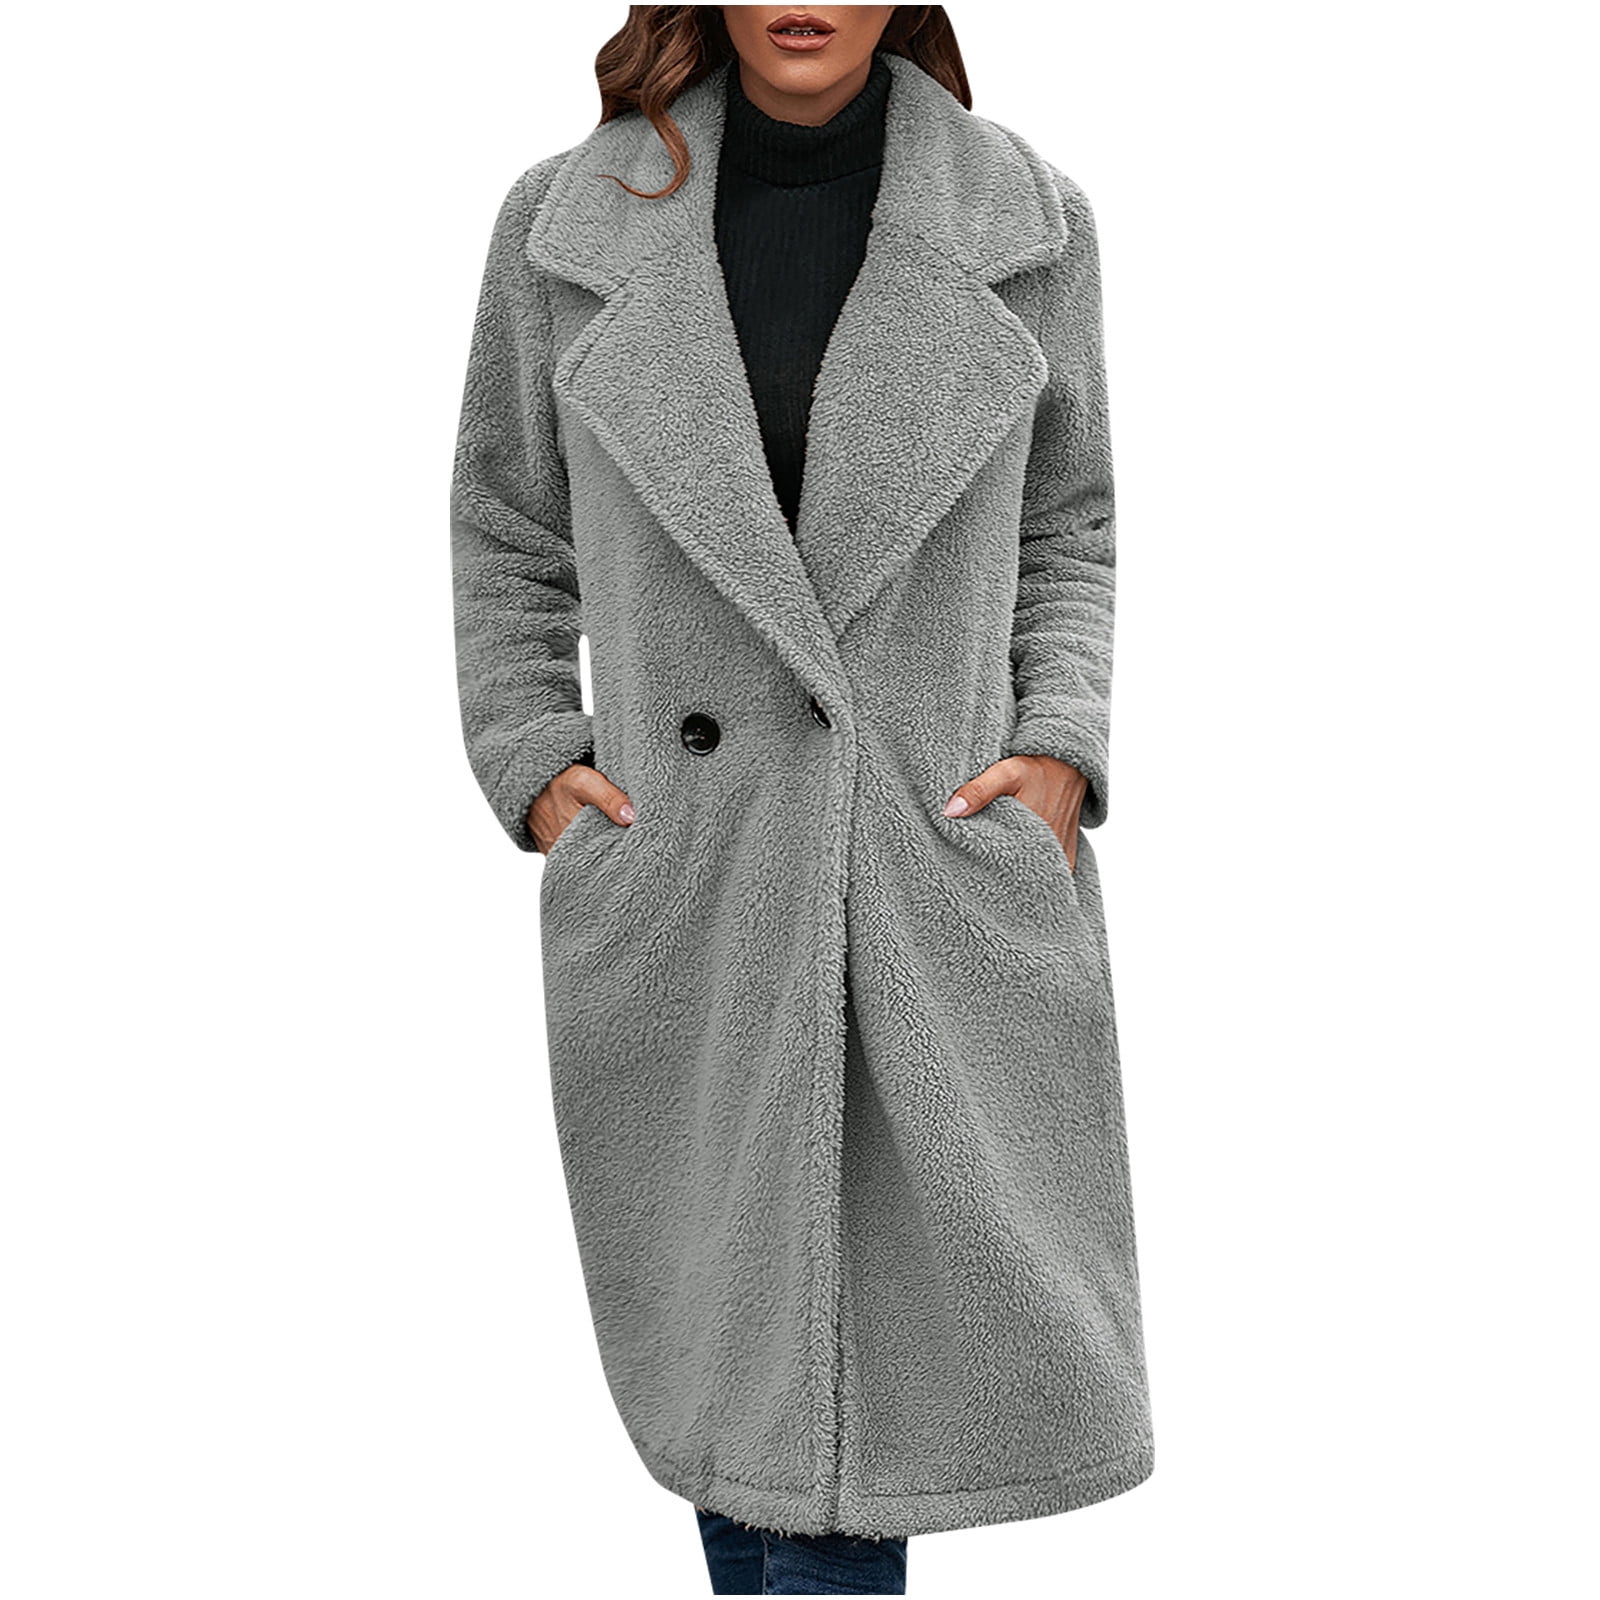 REORIAFEE Trench Coat Womens Fall Shackets Long Sleeve Trendy